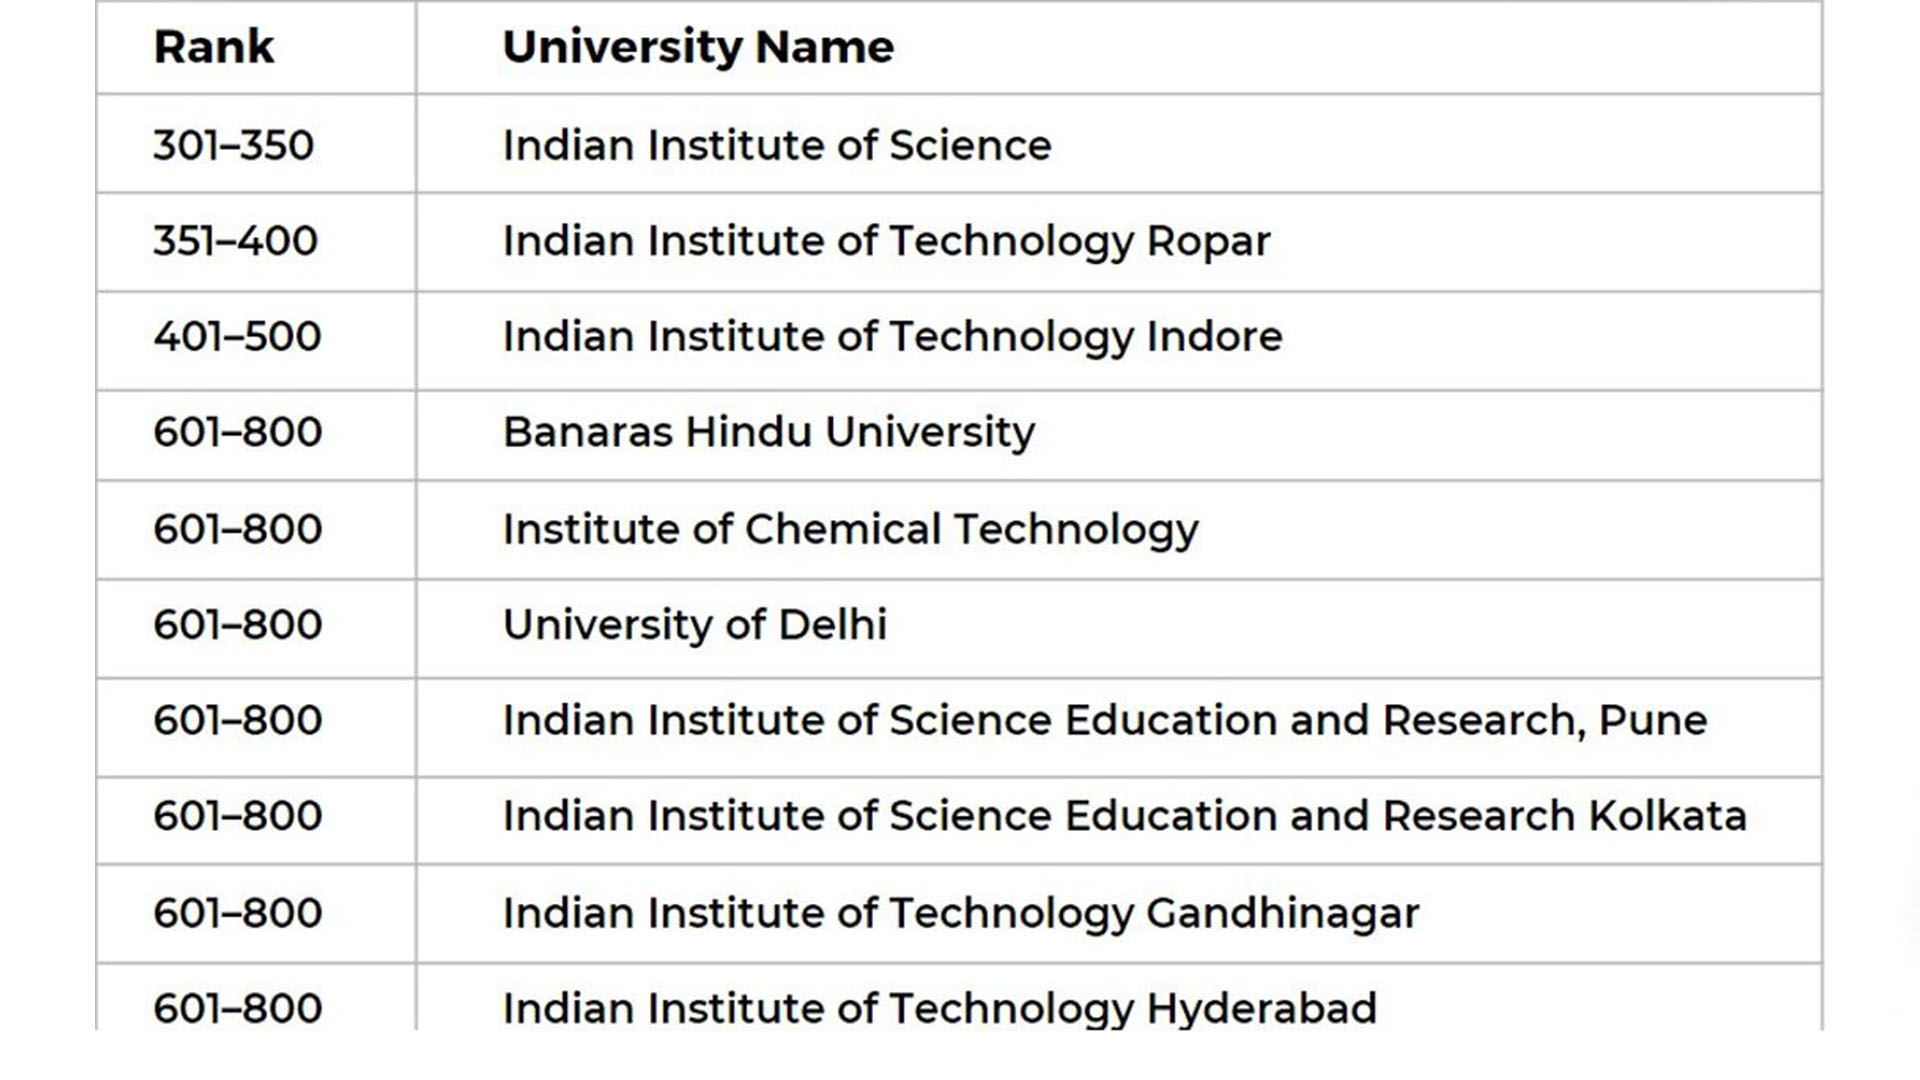 63 Indian universities join world ranking; IISc retains top position